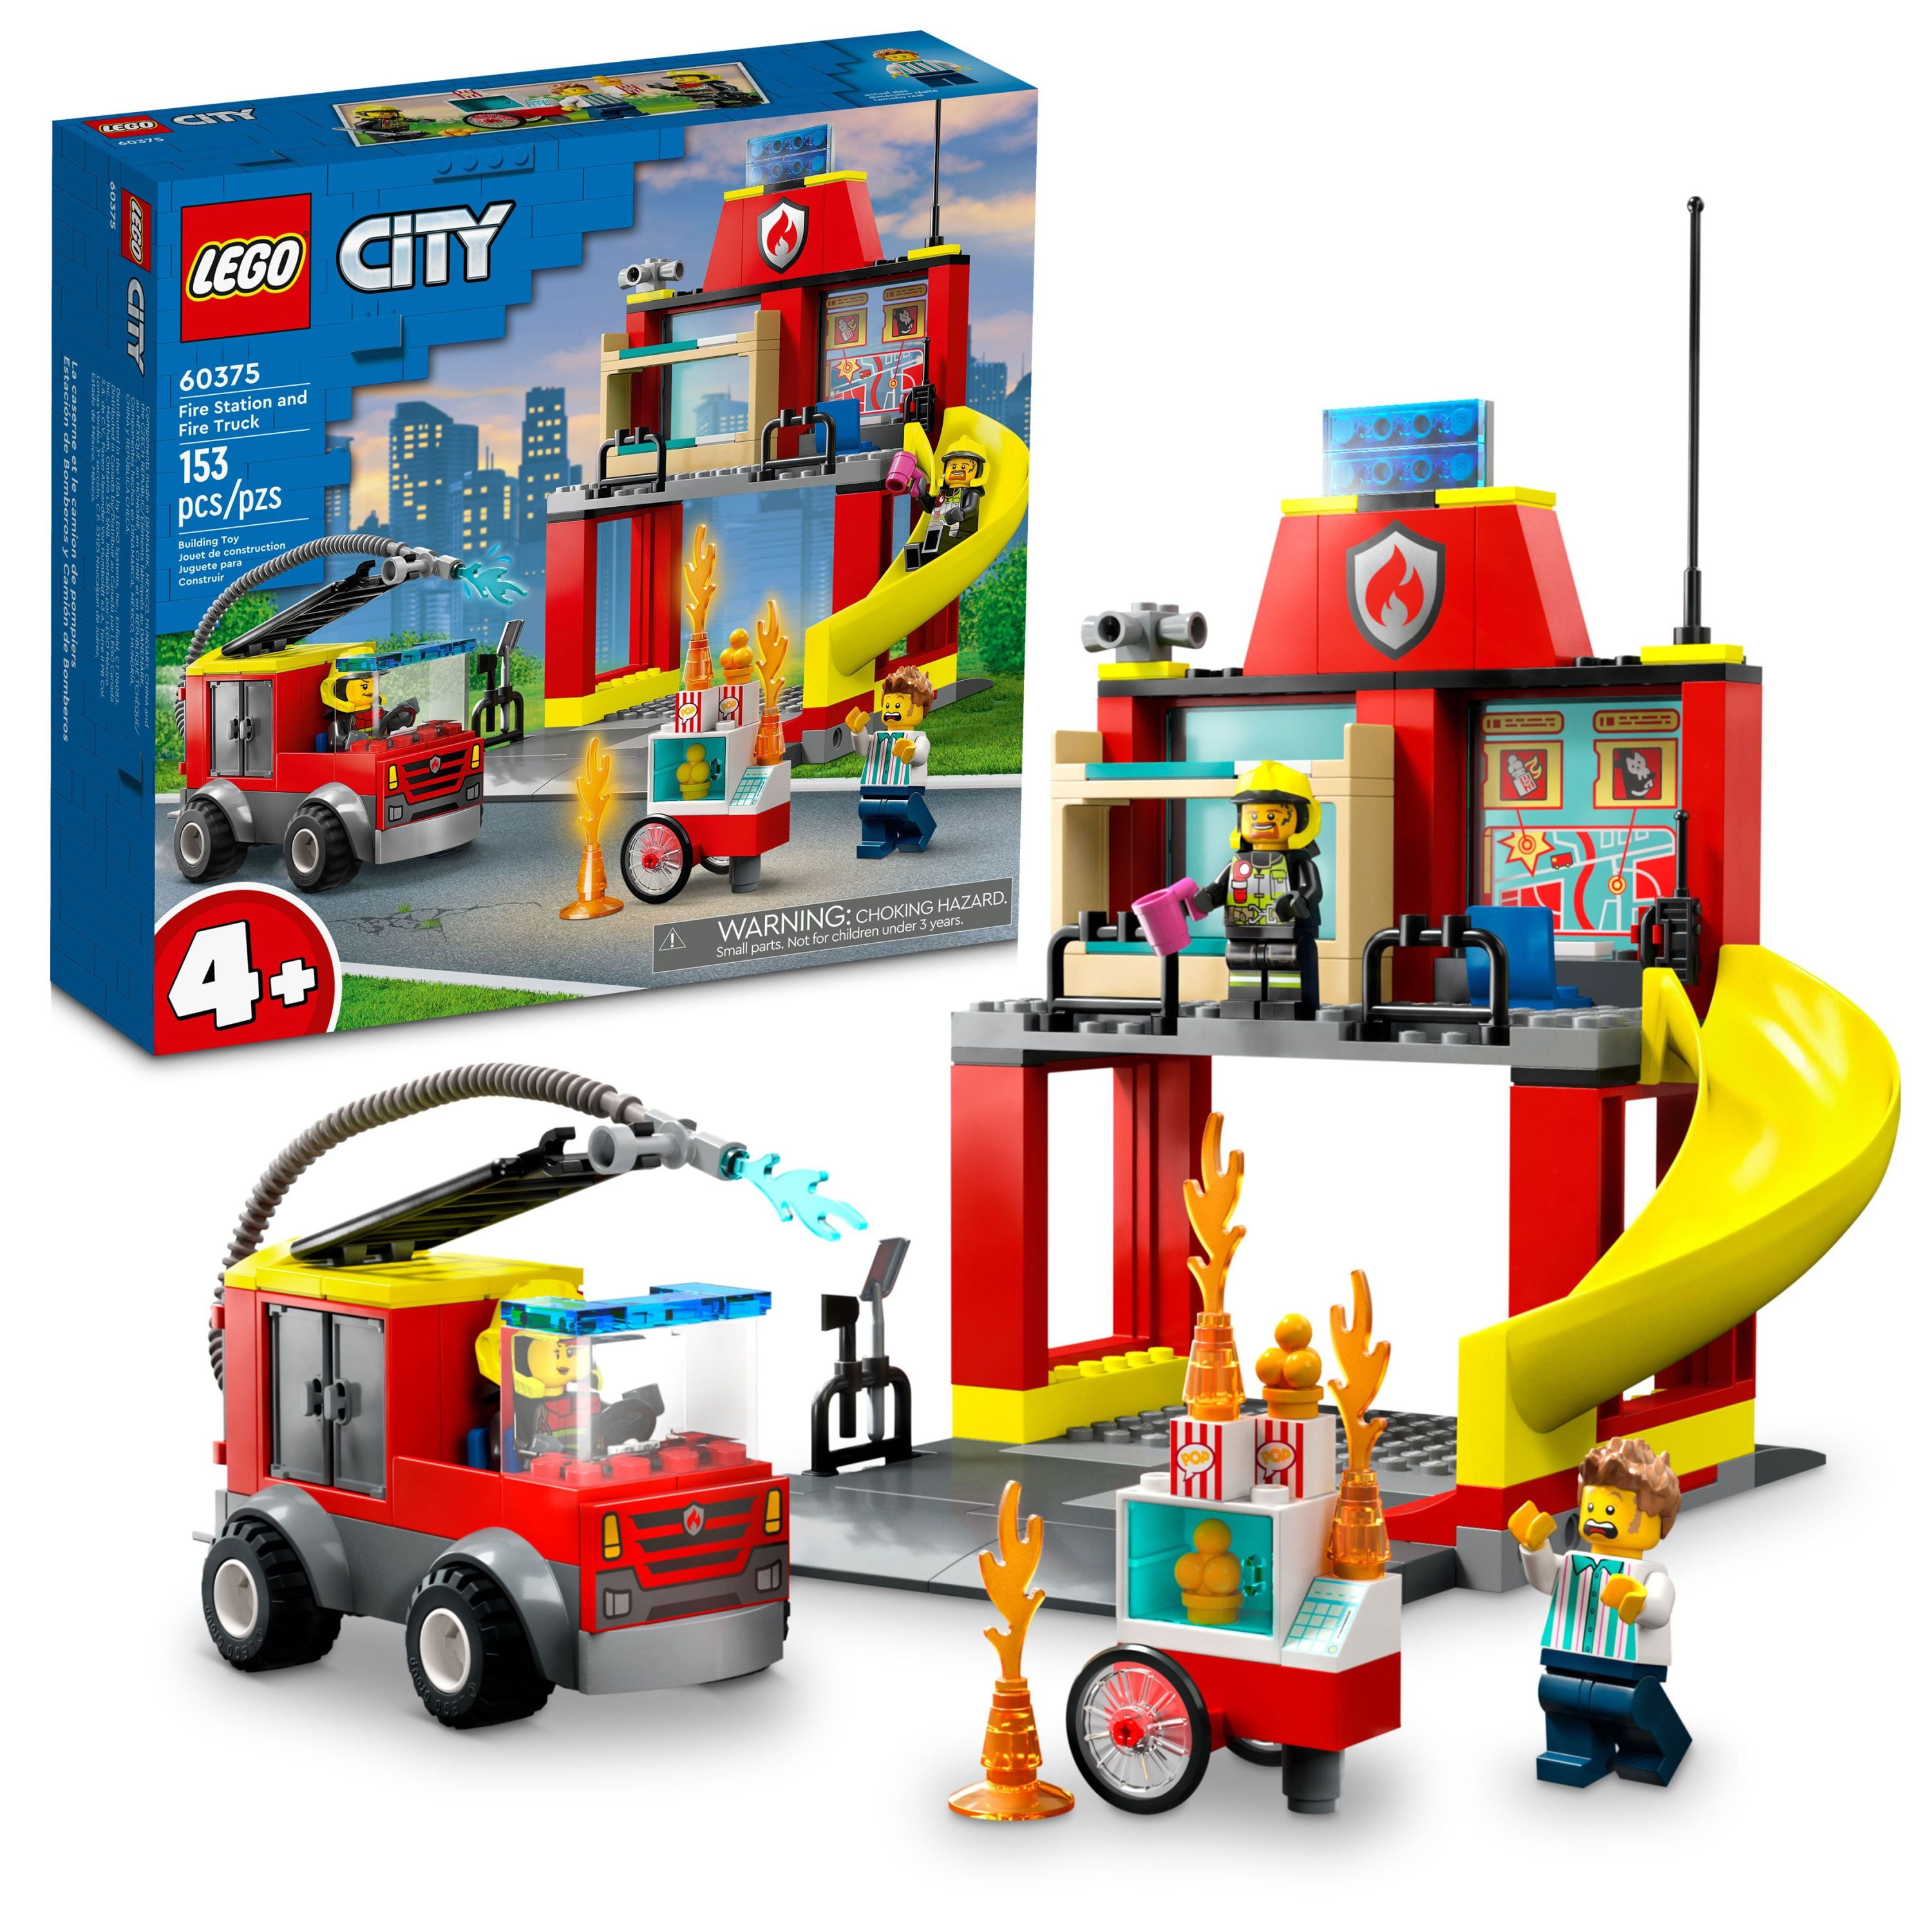 levenslang ijzer smal LEGO City 4+ Fire Station and Fire Engine Toy Playset 60375 - Walmart.com